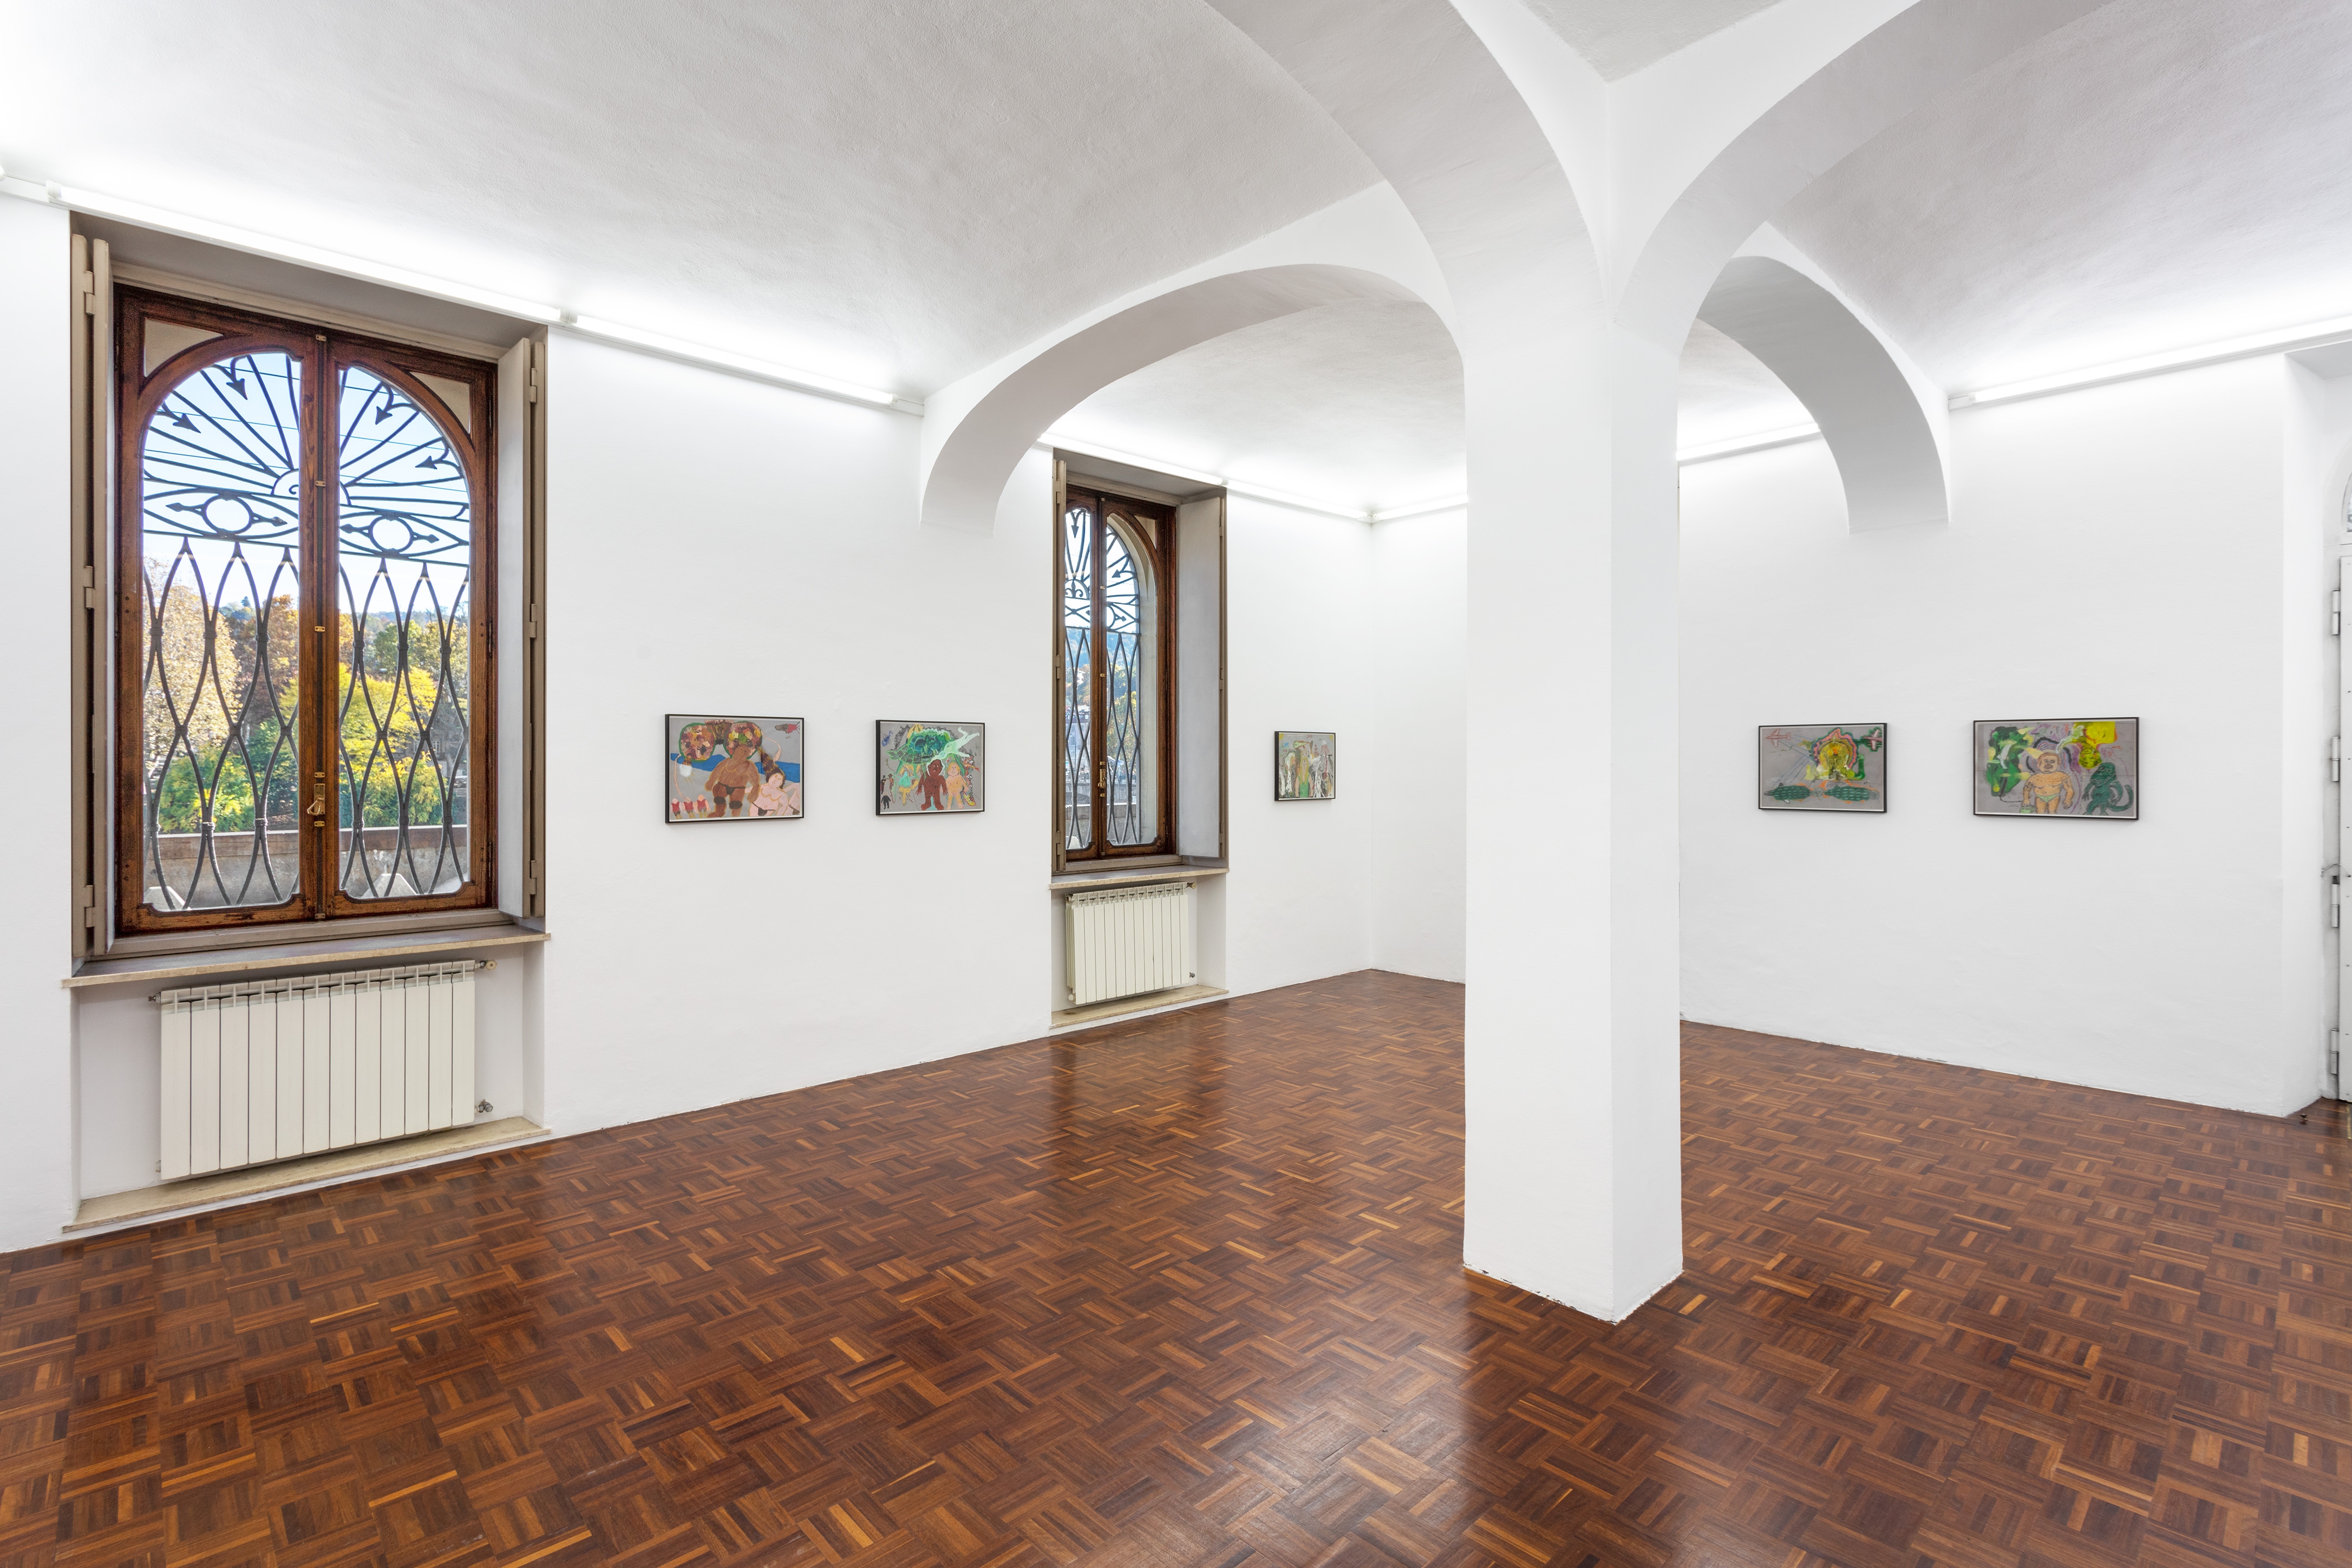 Norma Mangione Gallery